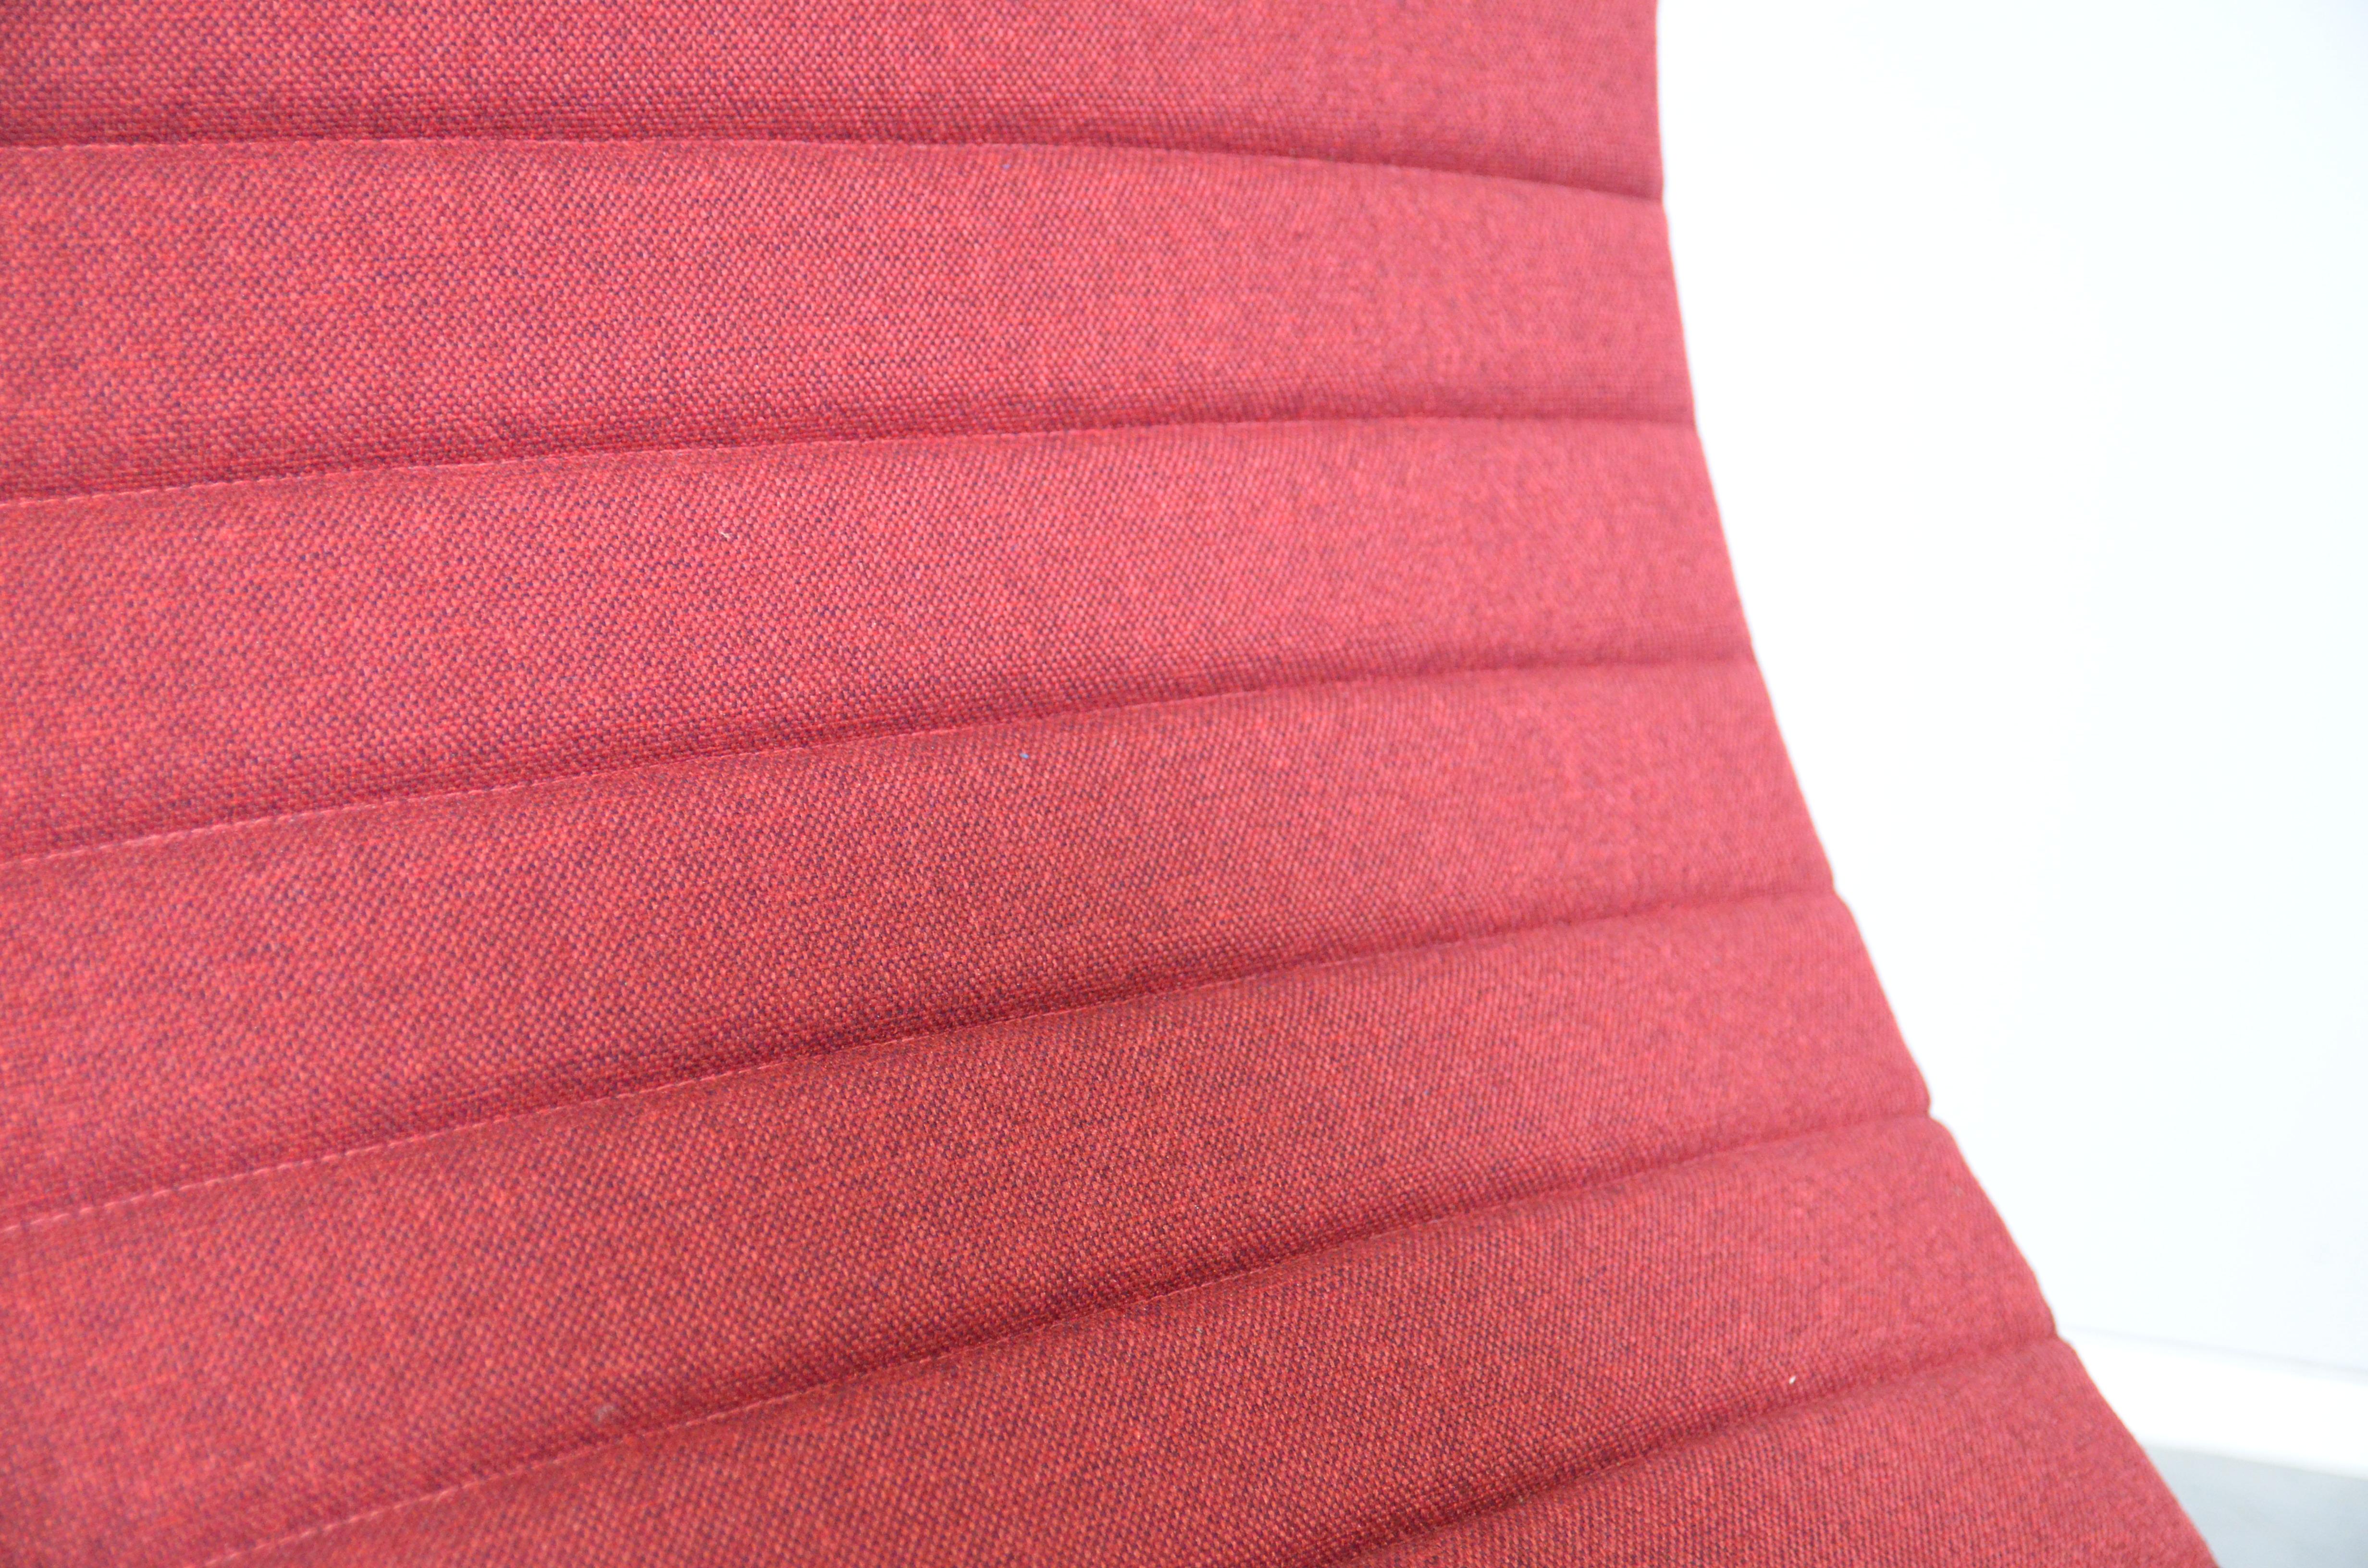 Fabric Relaxer 2 Verner Panton 